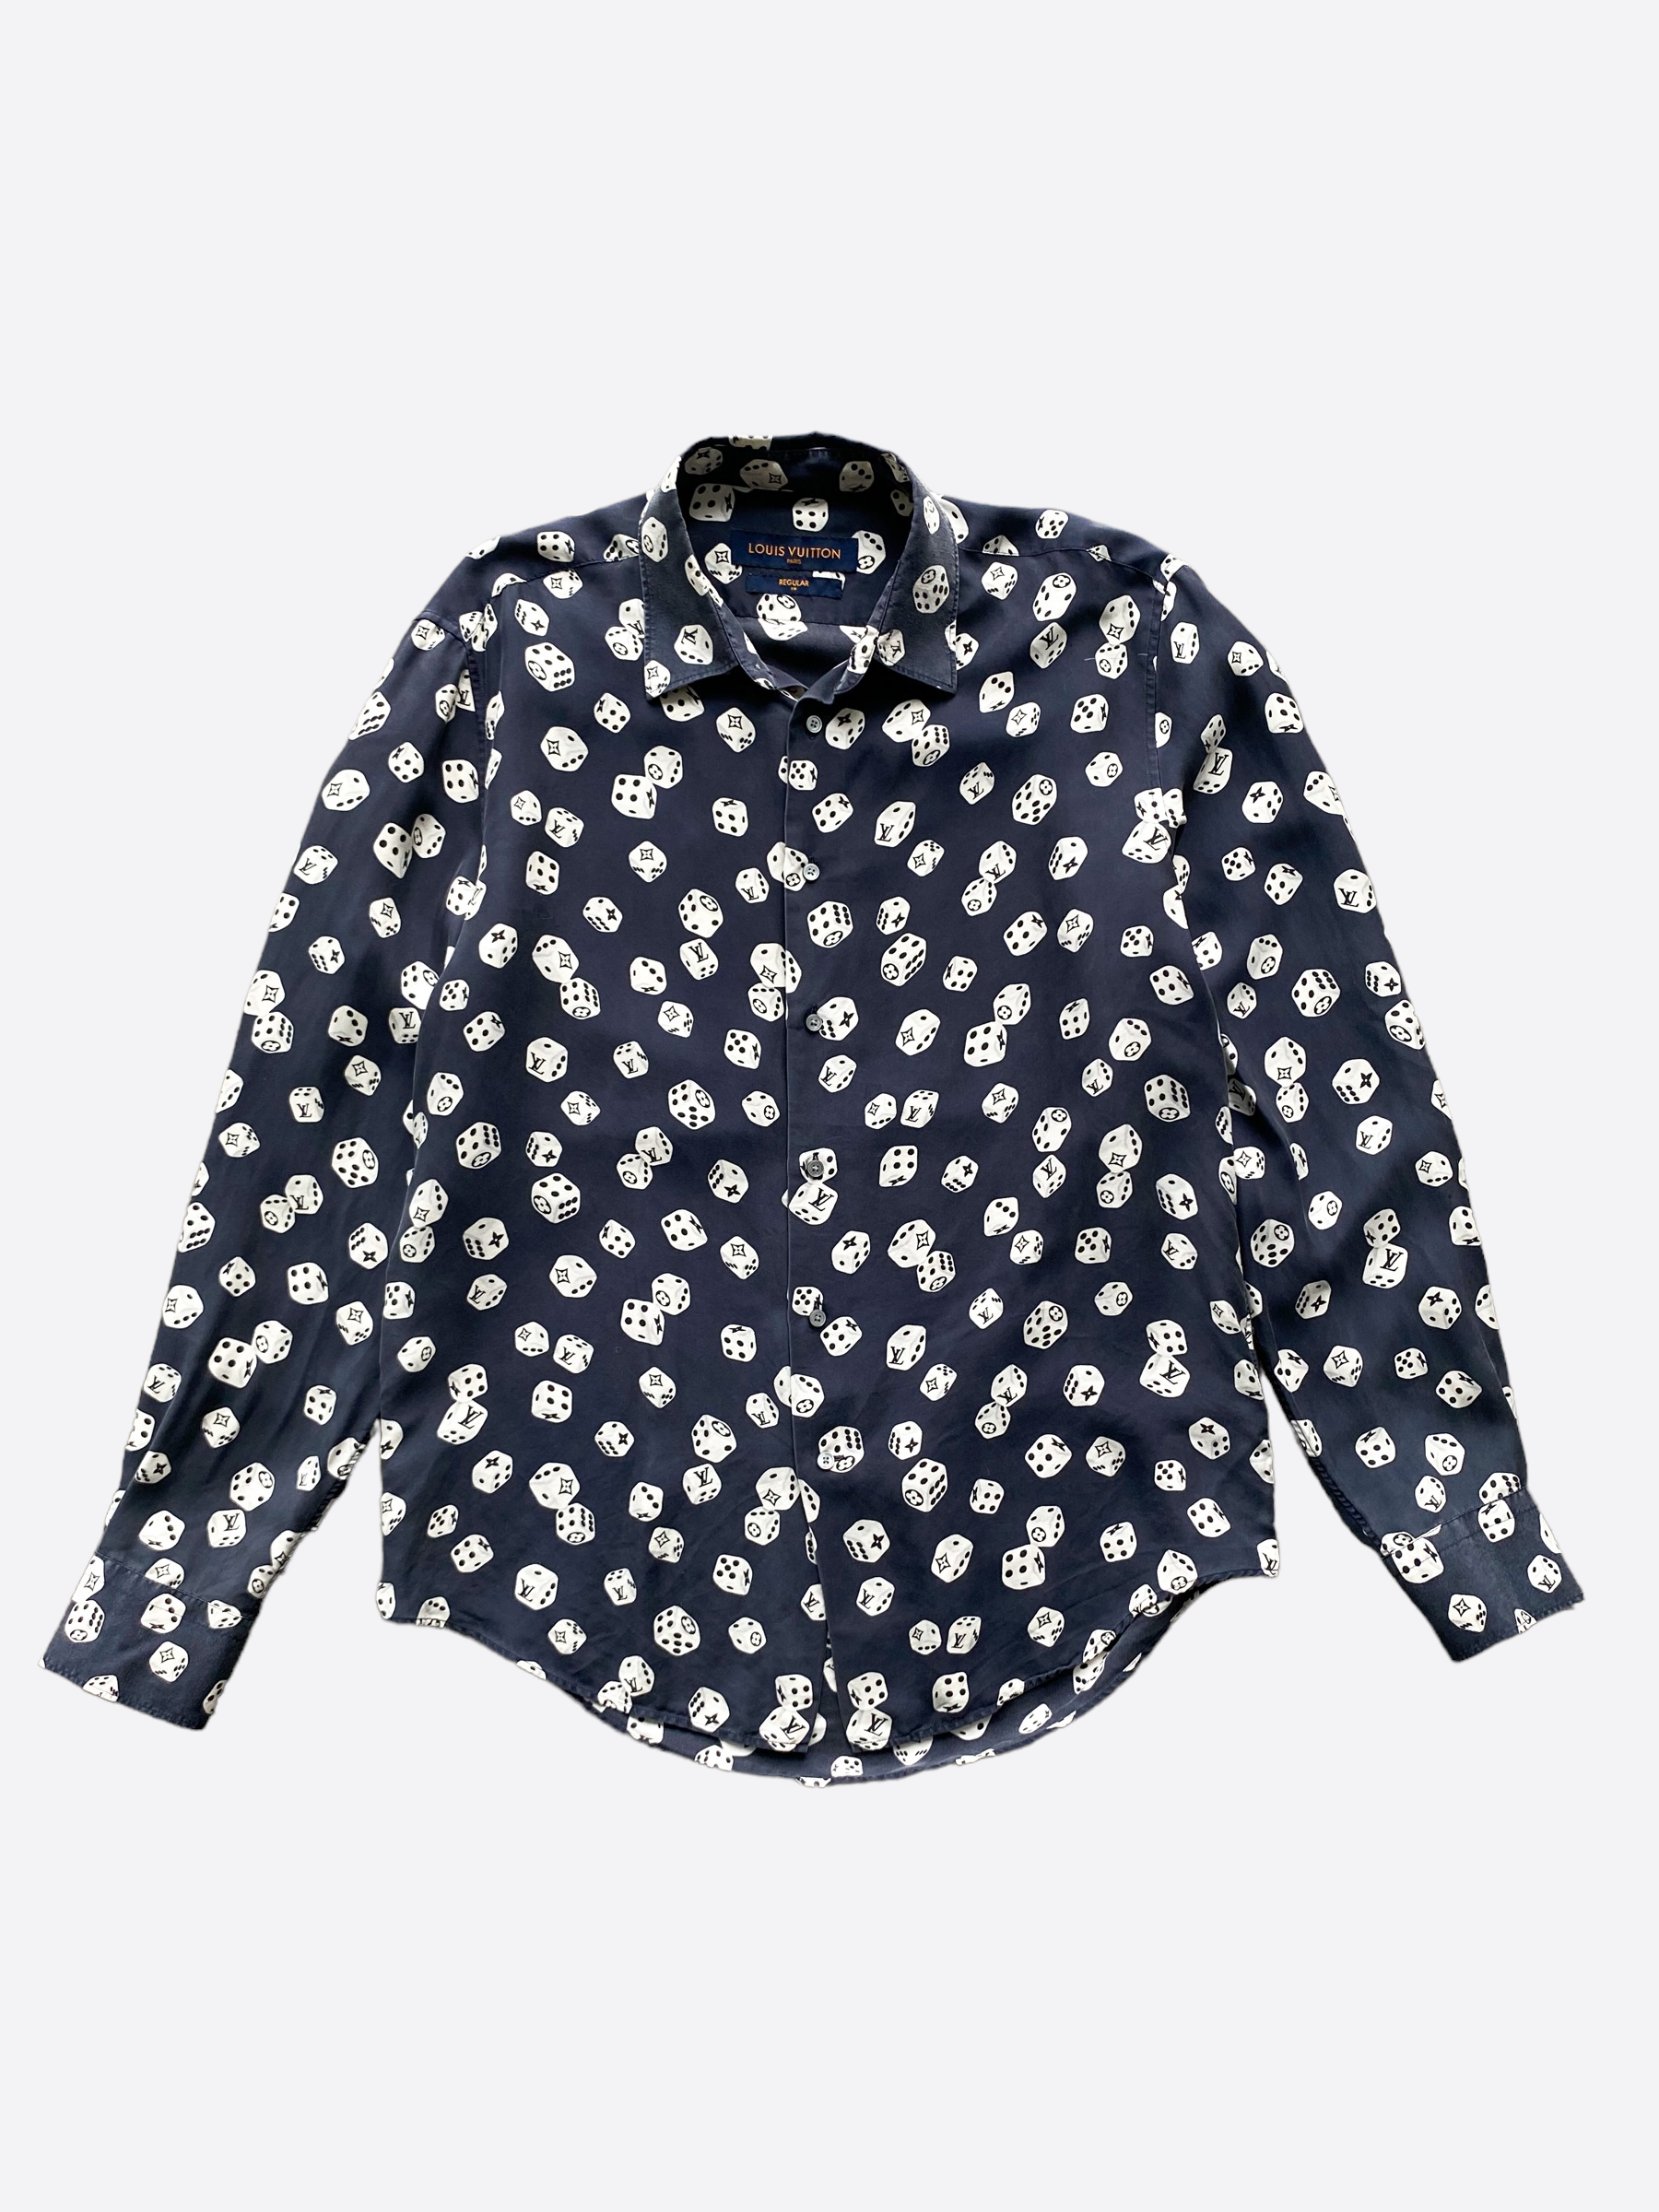 Louis Vuitton Plaid & Pink Monogram Button Up Shirt